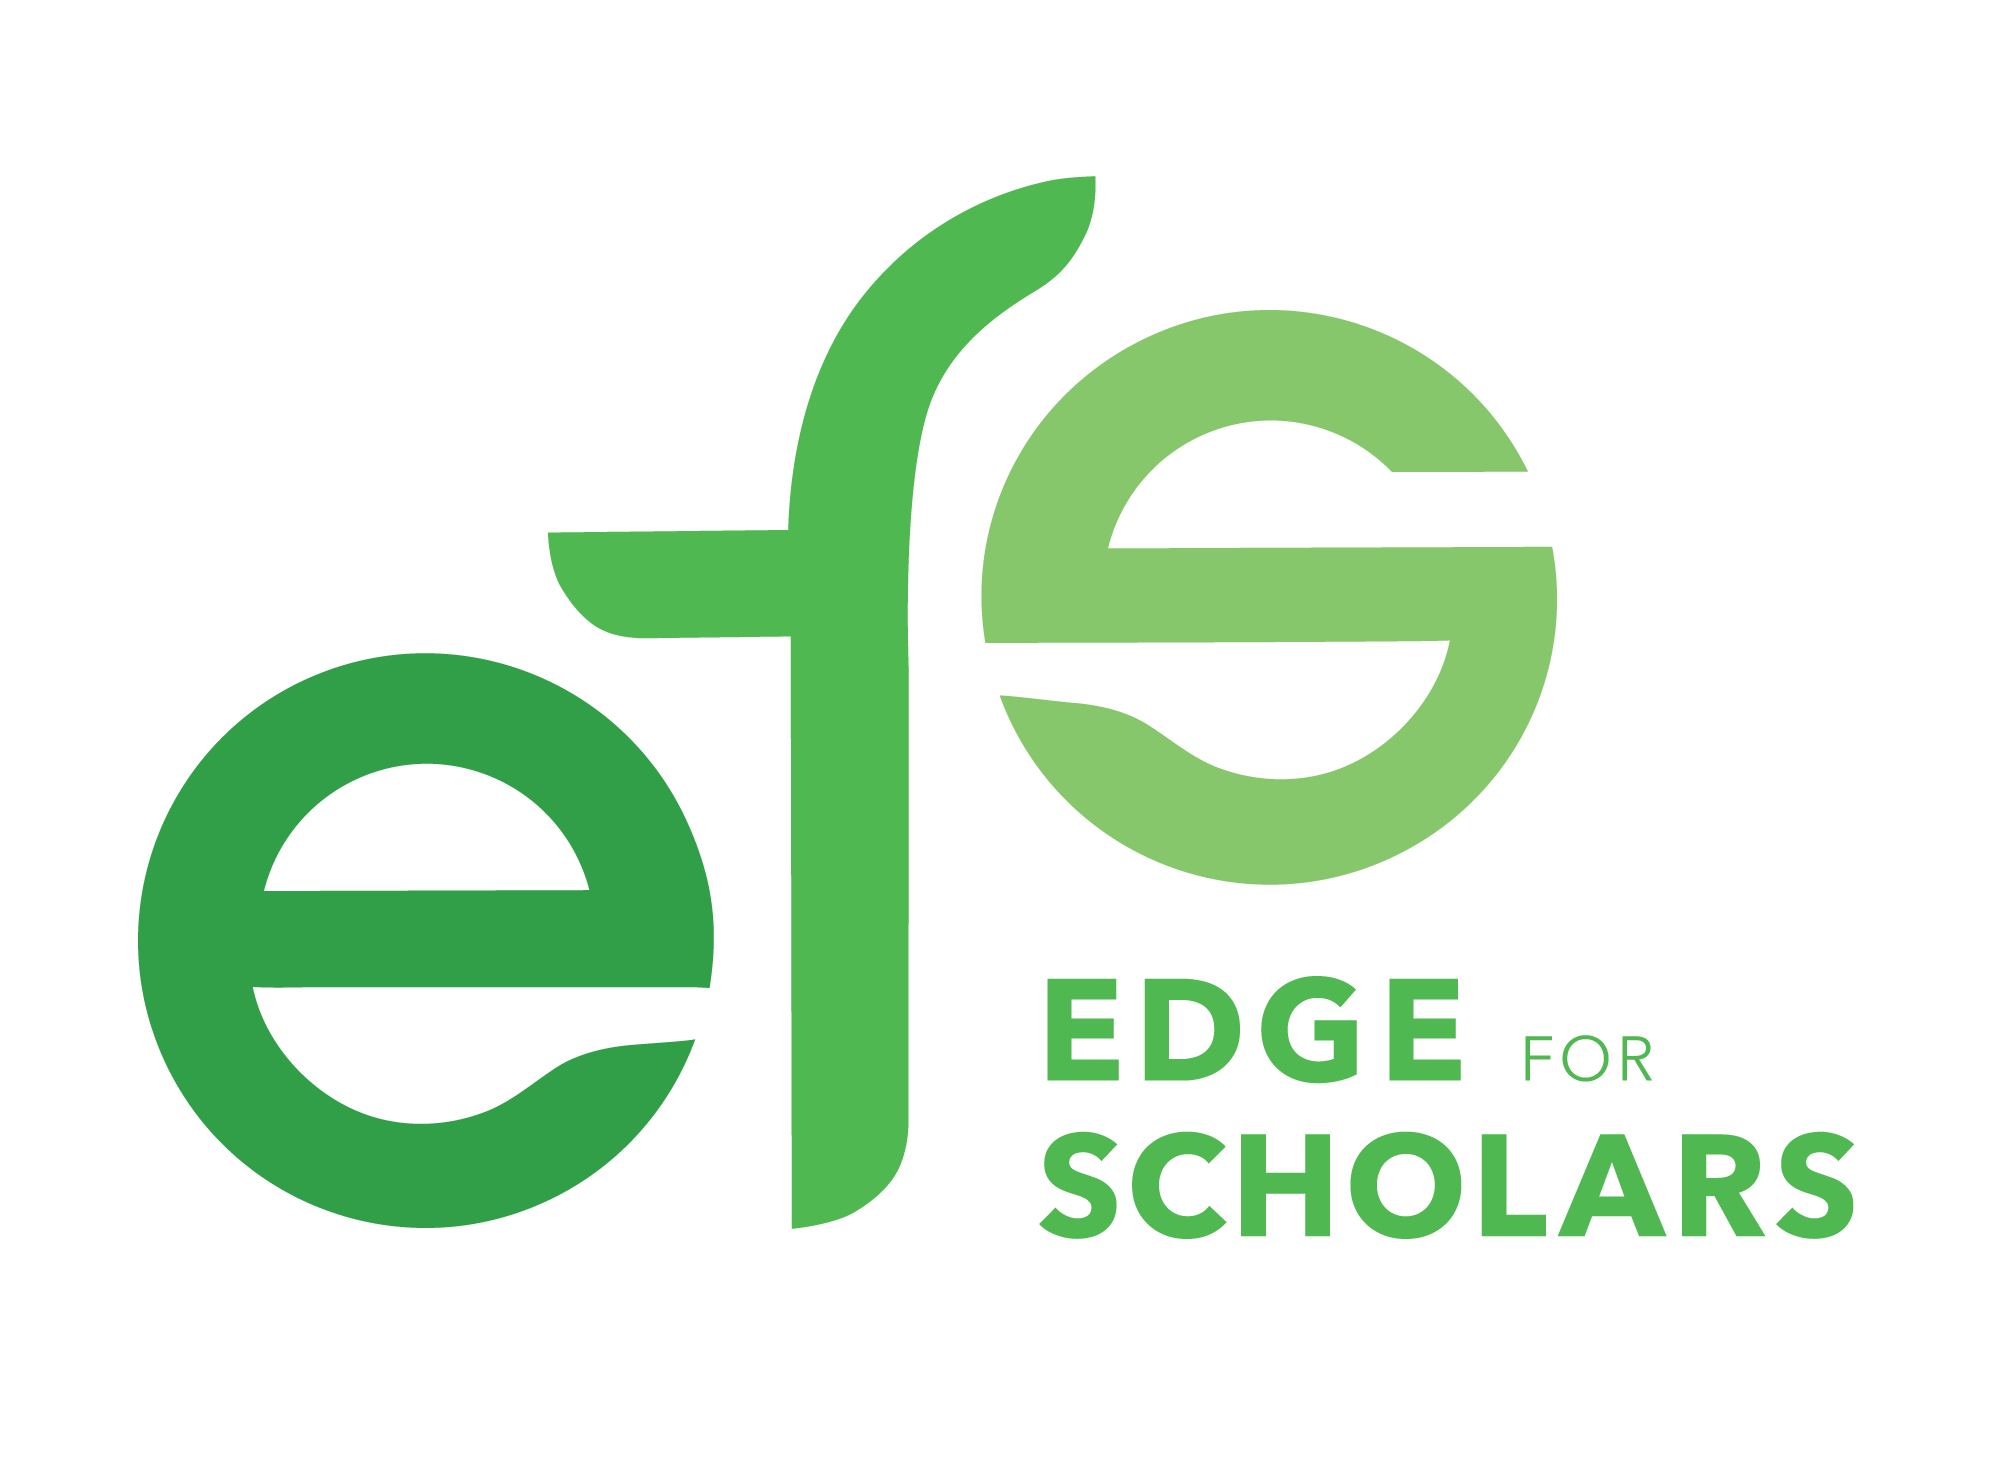 Edge for Scholars at Vanderbilt